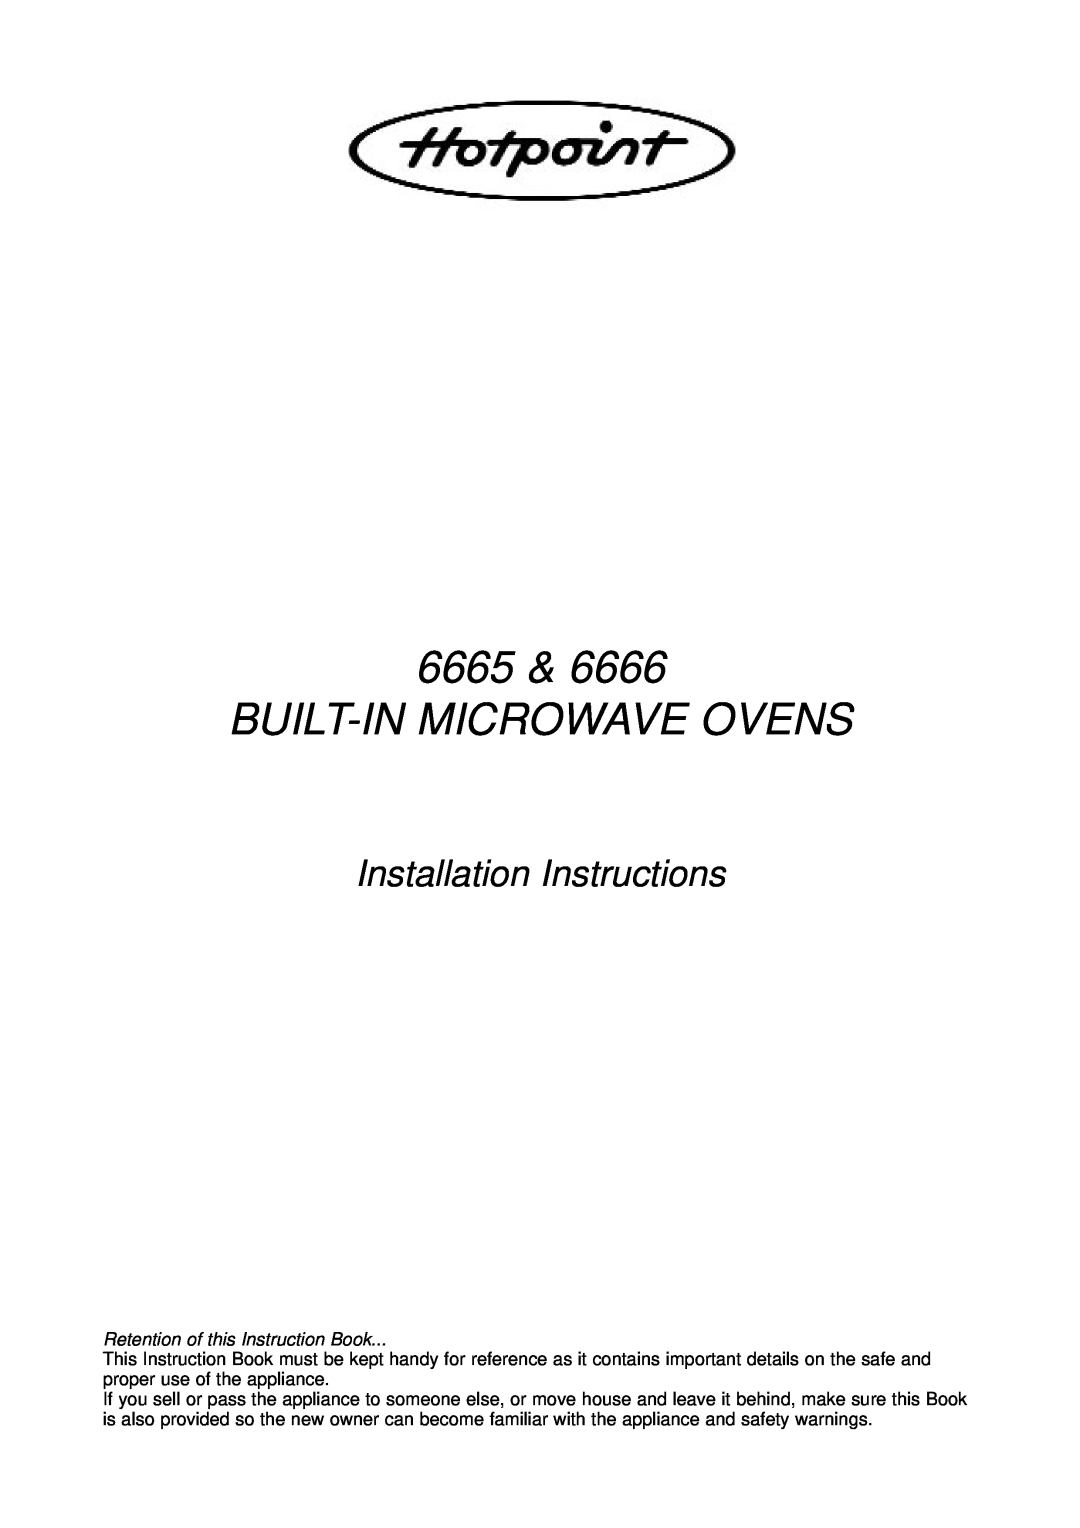 Hotpoint 6665 installation instructions Built-In Microwave Ovens, Installation Instructions 